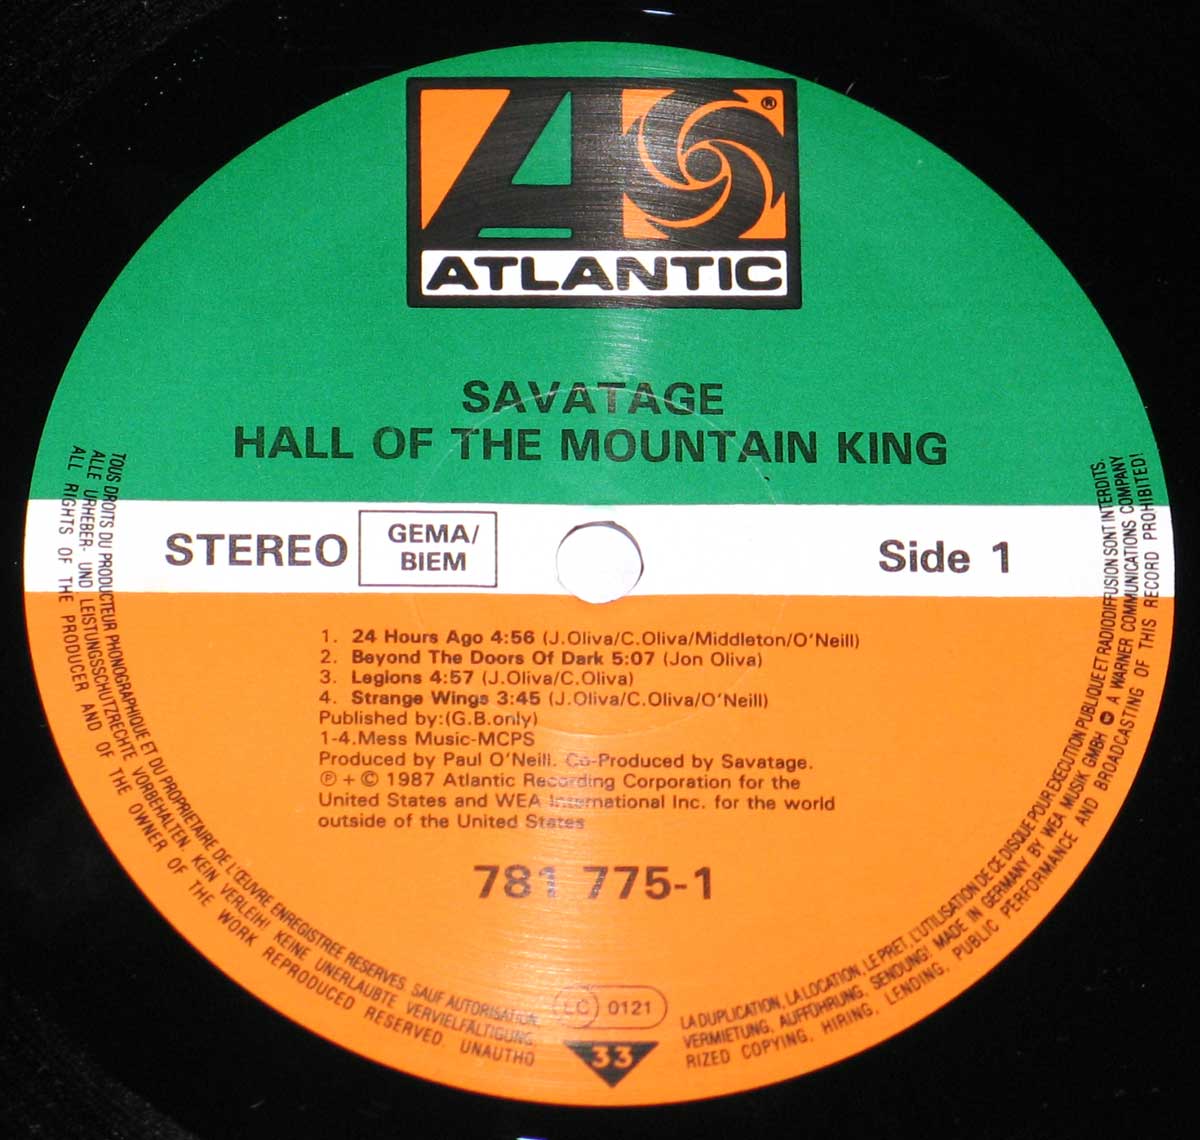 Savatage Hall of Mountain King 12" Vinyl LP